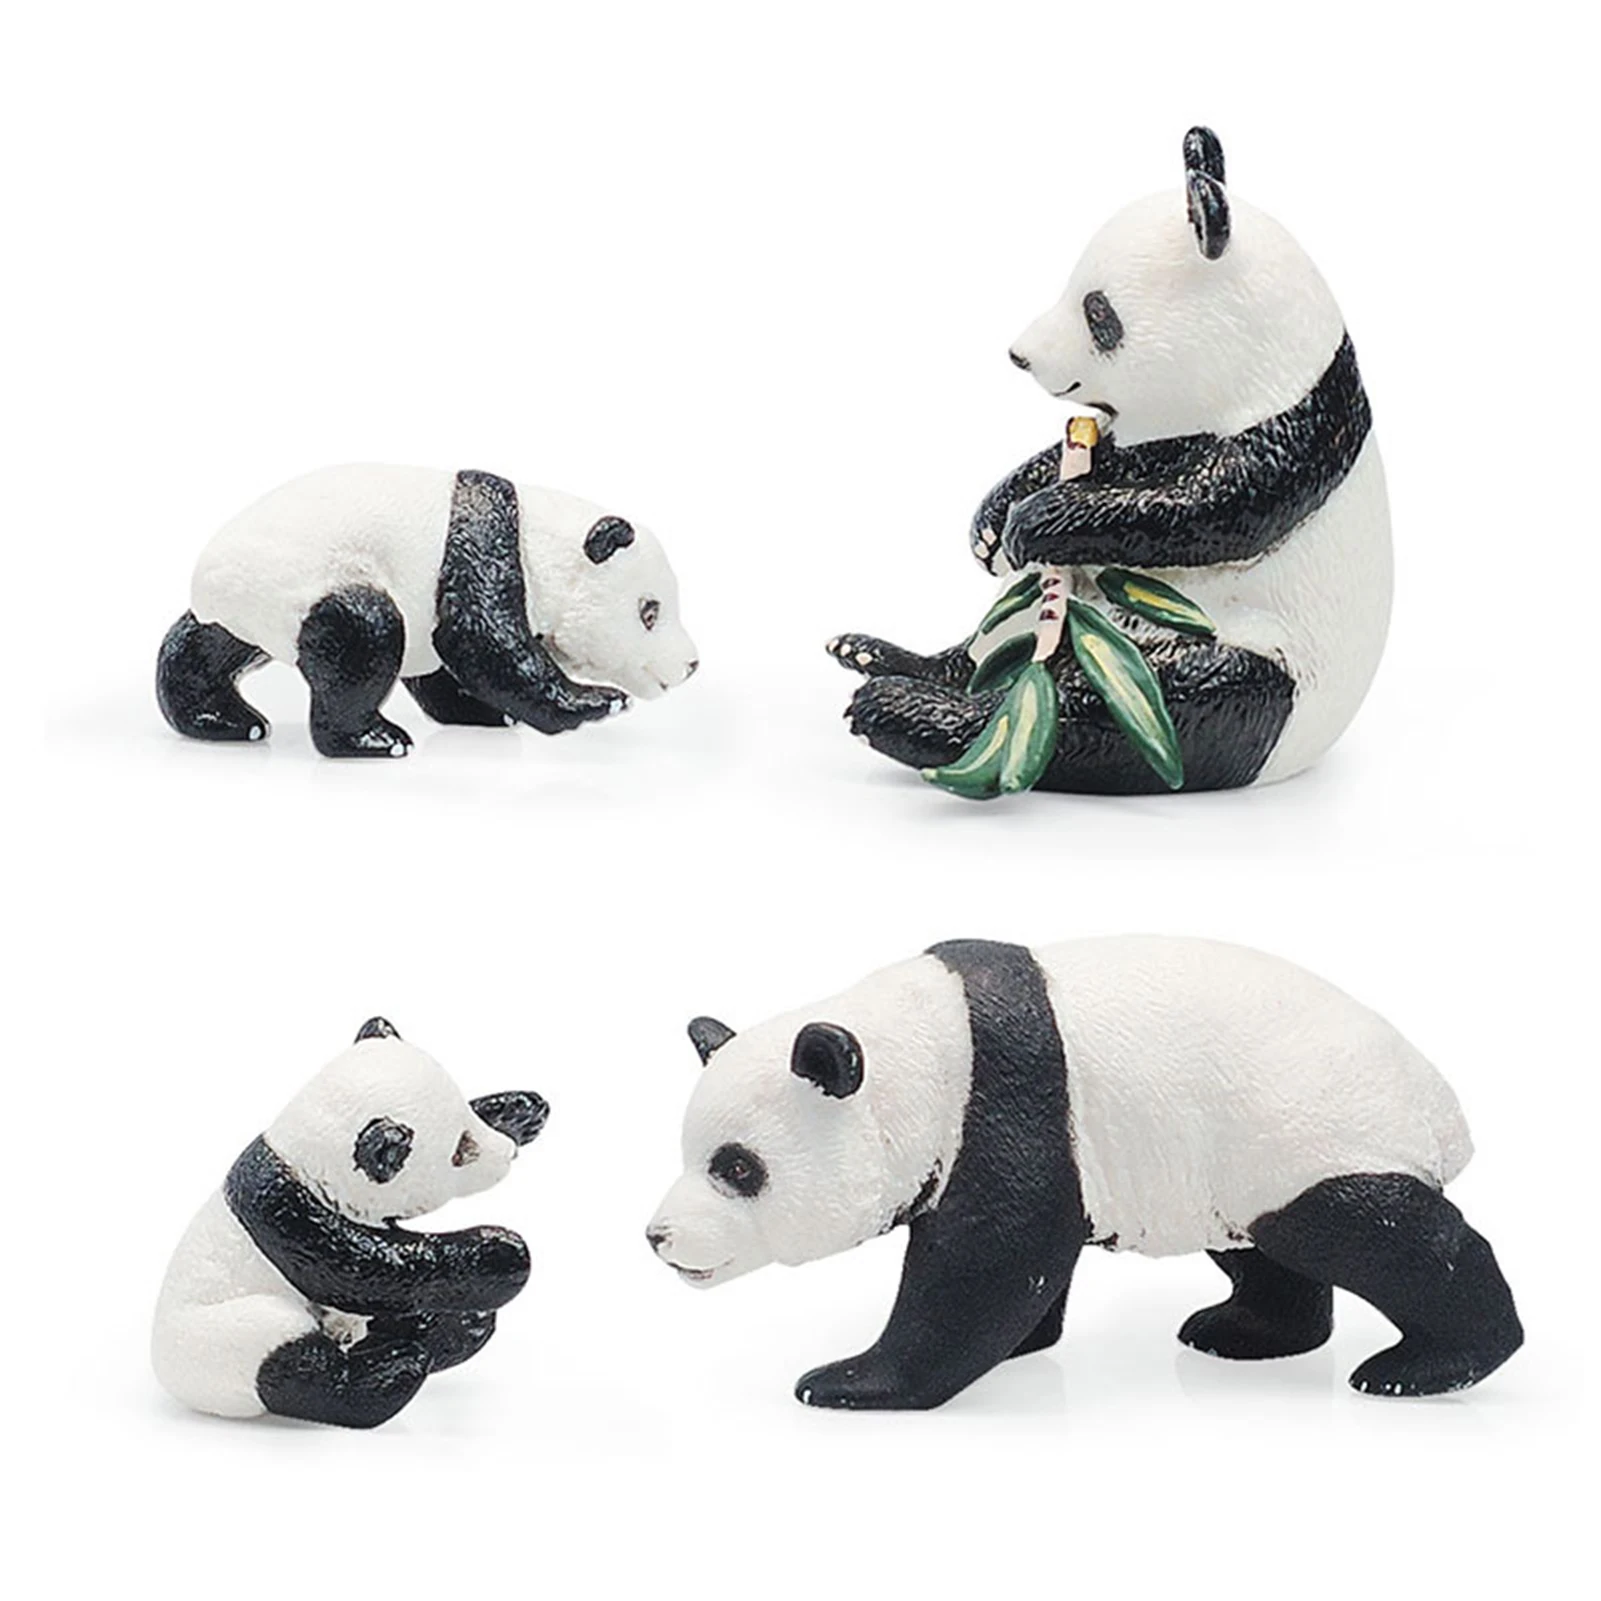 

Simulation Life-like Animal Toy Sitting Panda Model Figurine Action Figures Home Decor Educational Toys For Children